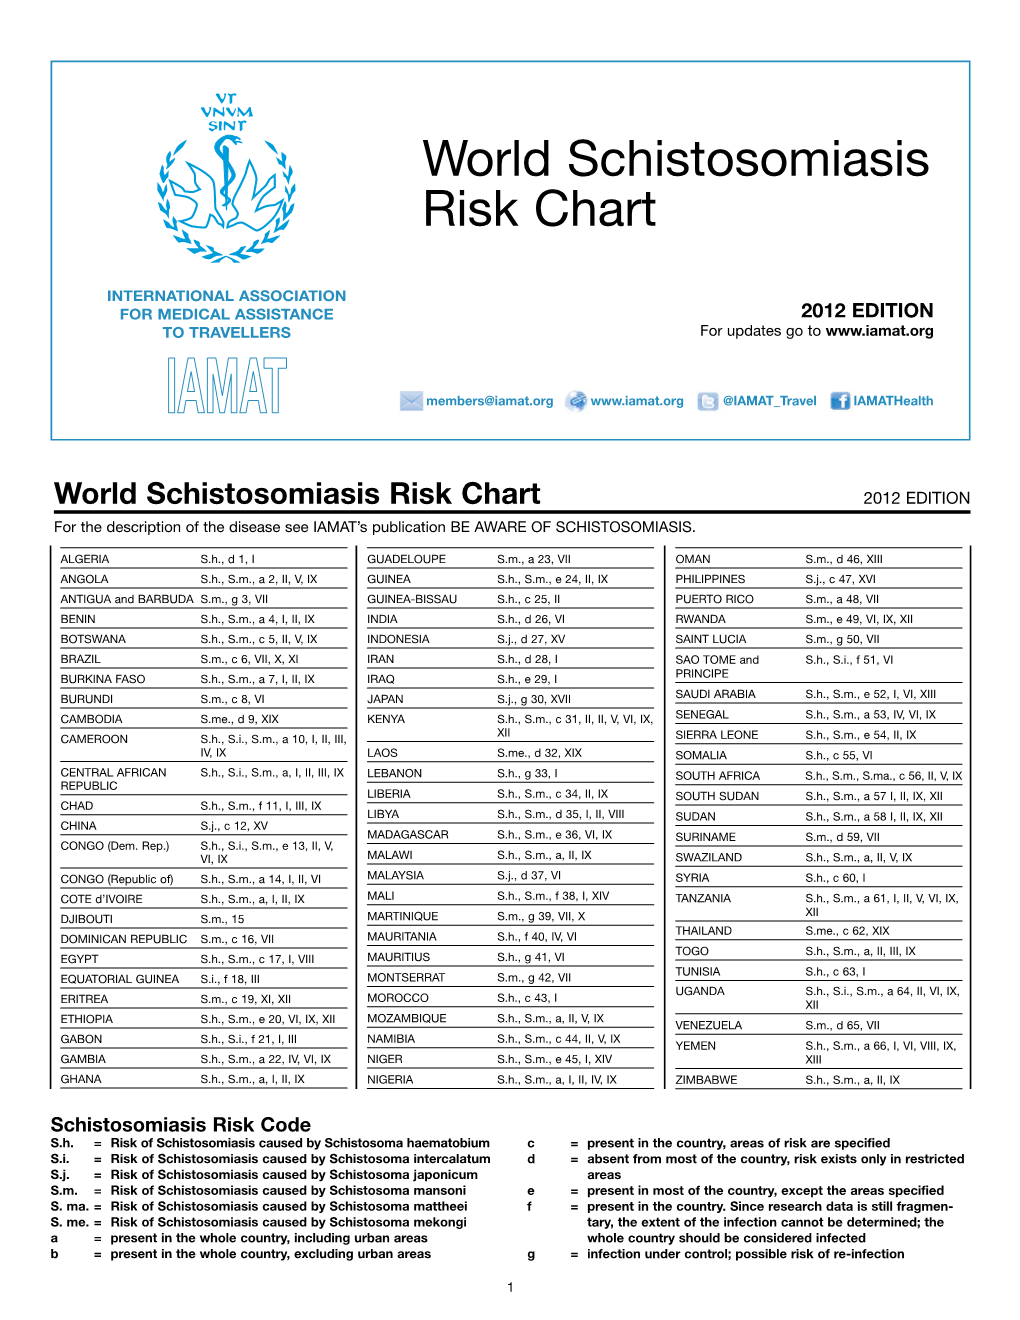 World Schistosomiasis Risk Chart